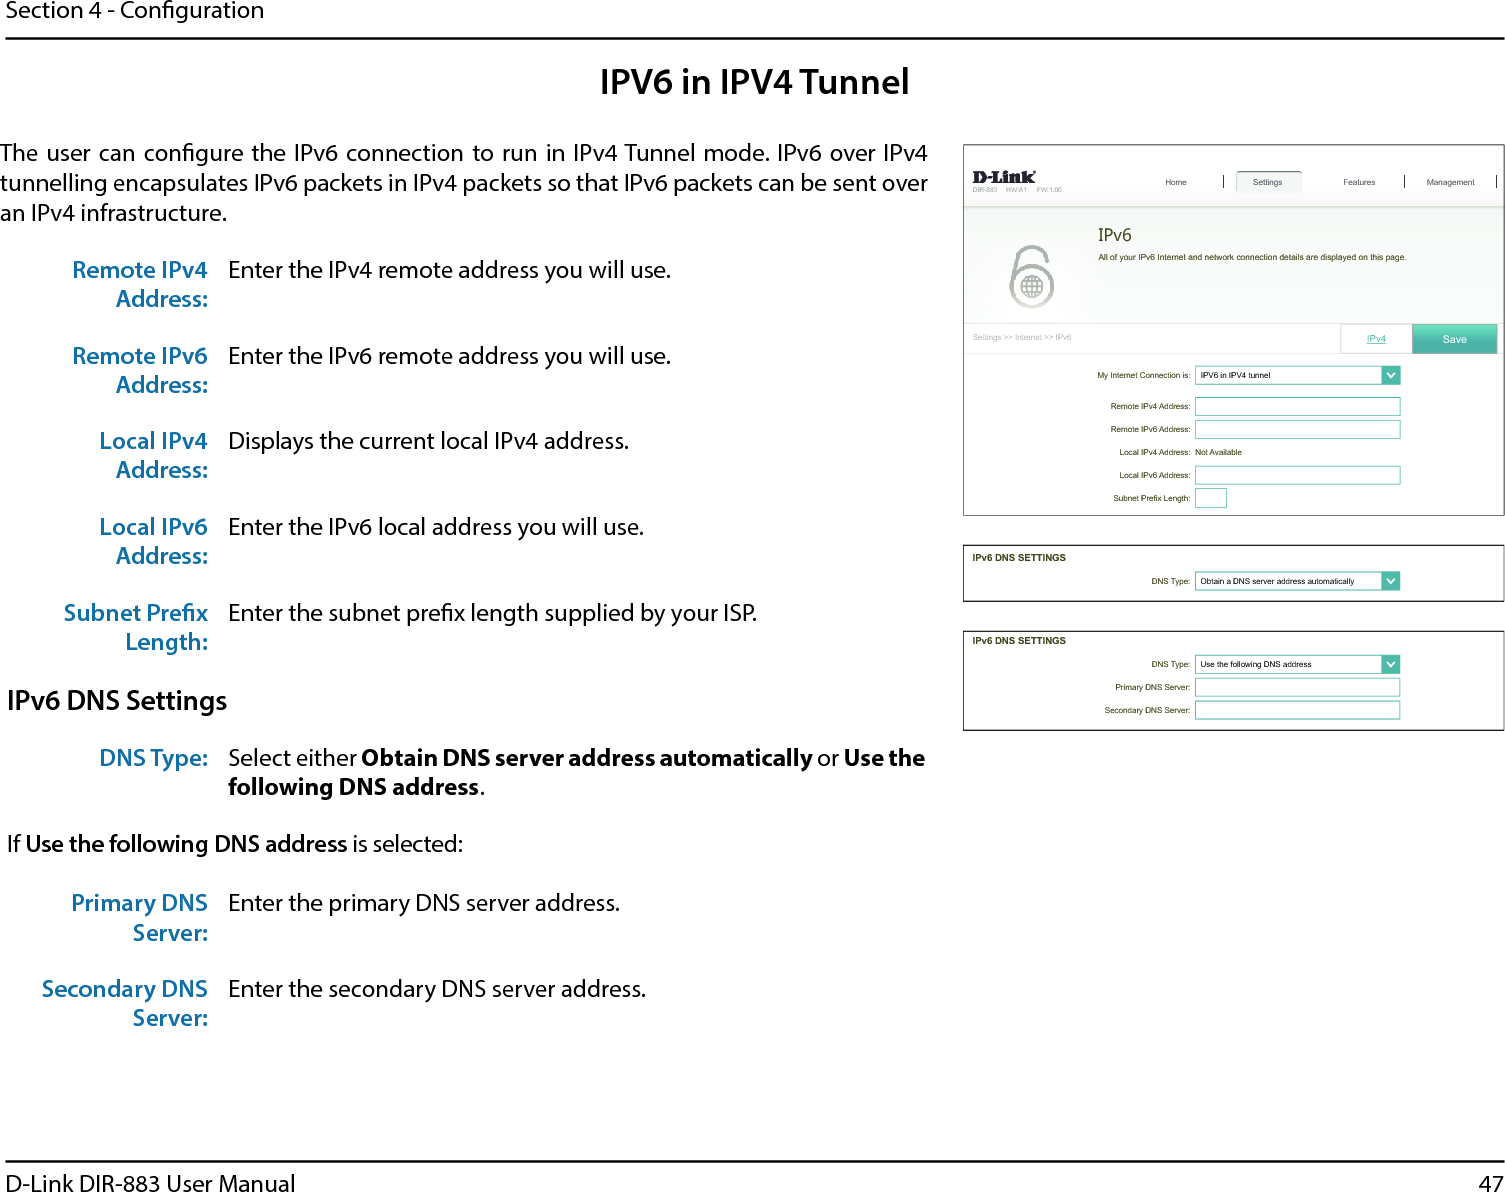 47D-Link DIR-883 User ManualSection 4 - CongurationIPV6 in IPV4 TunnelThe user can congure the IPv6 connection to run in IPv4 Tunnel mode. IPv6 over IPv4 tunnelling encapsulates IPv6 packets in IPv4 packets so that IPv6 packets can be sent over an IPv4 infrastructure.Remote IPv4 Address:Enter the IPv4 remote address you will use.Remote IPv6 Address:Enter the IPv6 remote address you will use.Local IPv4 Address:Displays the current local IPv4 address.Local IPv6 Address:Enter the IPv6 local address you will use.Subnet Prex Length:Enter the subnet prex length supplied by your ISP.IPv6 DNS SettingsDNS Type: Select either Obtain DNS server address automatically or Use the following DNS address.If Use the following DNS address is selected:Primary DNS Server:Enter the primary DNS server address. Secondary DNS Server:Enter the secondary DNS server address.My Internet Connection is: ,39LQ,39WXQQHO໹&apos;,5 +:$ ):6HWWLQJV!!,QWHUQHW!!,3Y6HWWLQJV+RPH Features Management5HPRWH,3Y$GGUHVV5HPRWH,3Y$GGUHVV/RFDO,3Y$GGUHVV Not Available/RFDO,3Y$GGUHVV6XEQHW3UH¿[/HQJWK,3Y 6DYHIPv6$OORI\RXU,3Y,QWHUQHWDQGQHWZRUNFRQQHFWLRQGHWDLOVDUHGLVSOD\HGRQWKLVSDJH&apos;167\SH 2EWDLQD&apos;16VHUYHUDGGUHVVDXWRPDWLFDOO\໹,3Y&apos;166(77,1*6&apos;167\SH 8VHWKHIROORZLQJ&apos;16DGGUHVV໹3ULPDU\&apos;166HUYHU6HFRQGDU\&apos;166HUYHU,3Y&apos;166(77,1*6